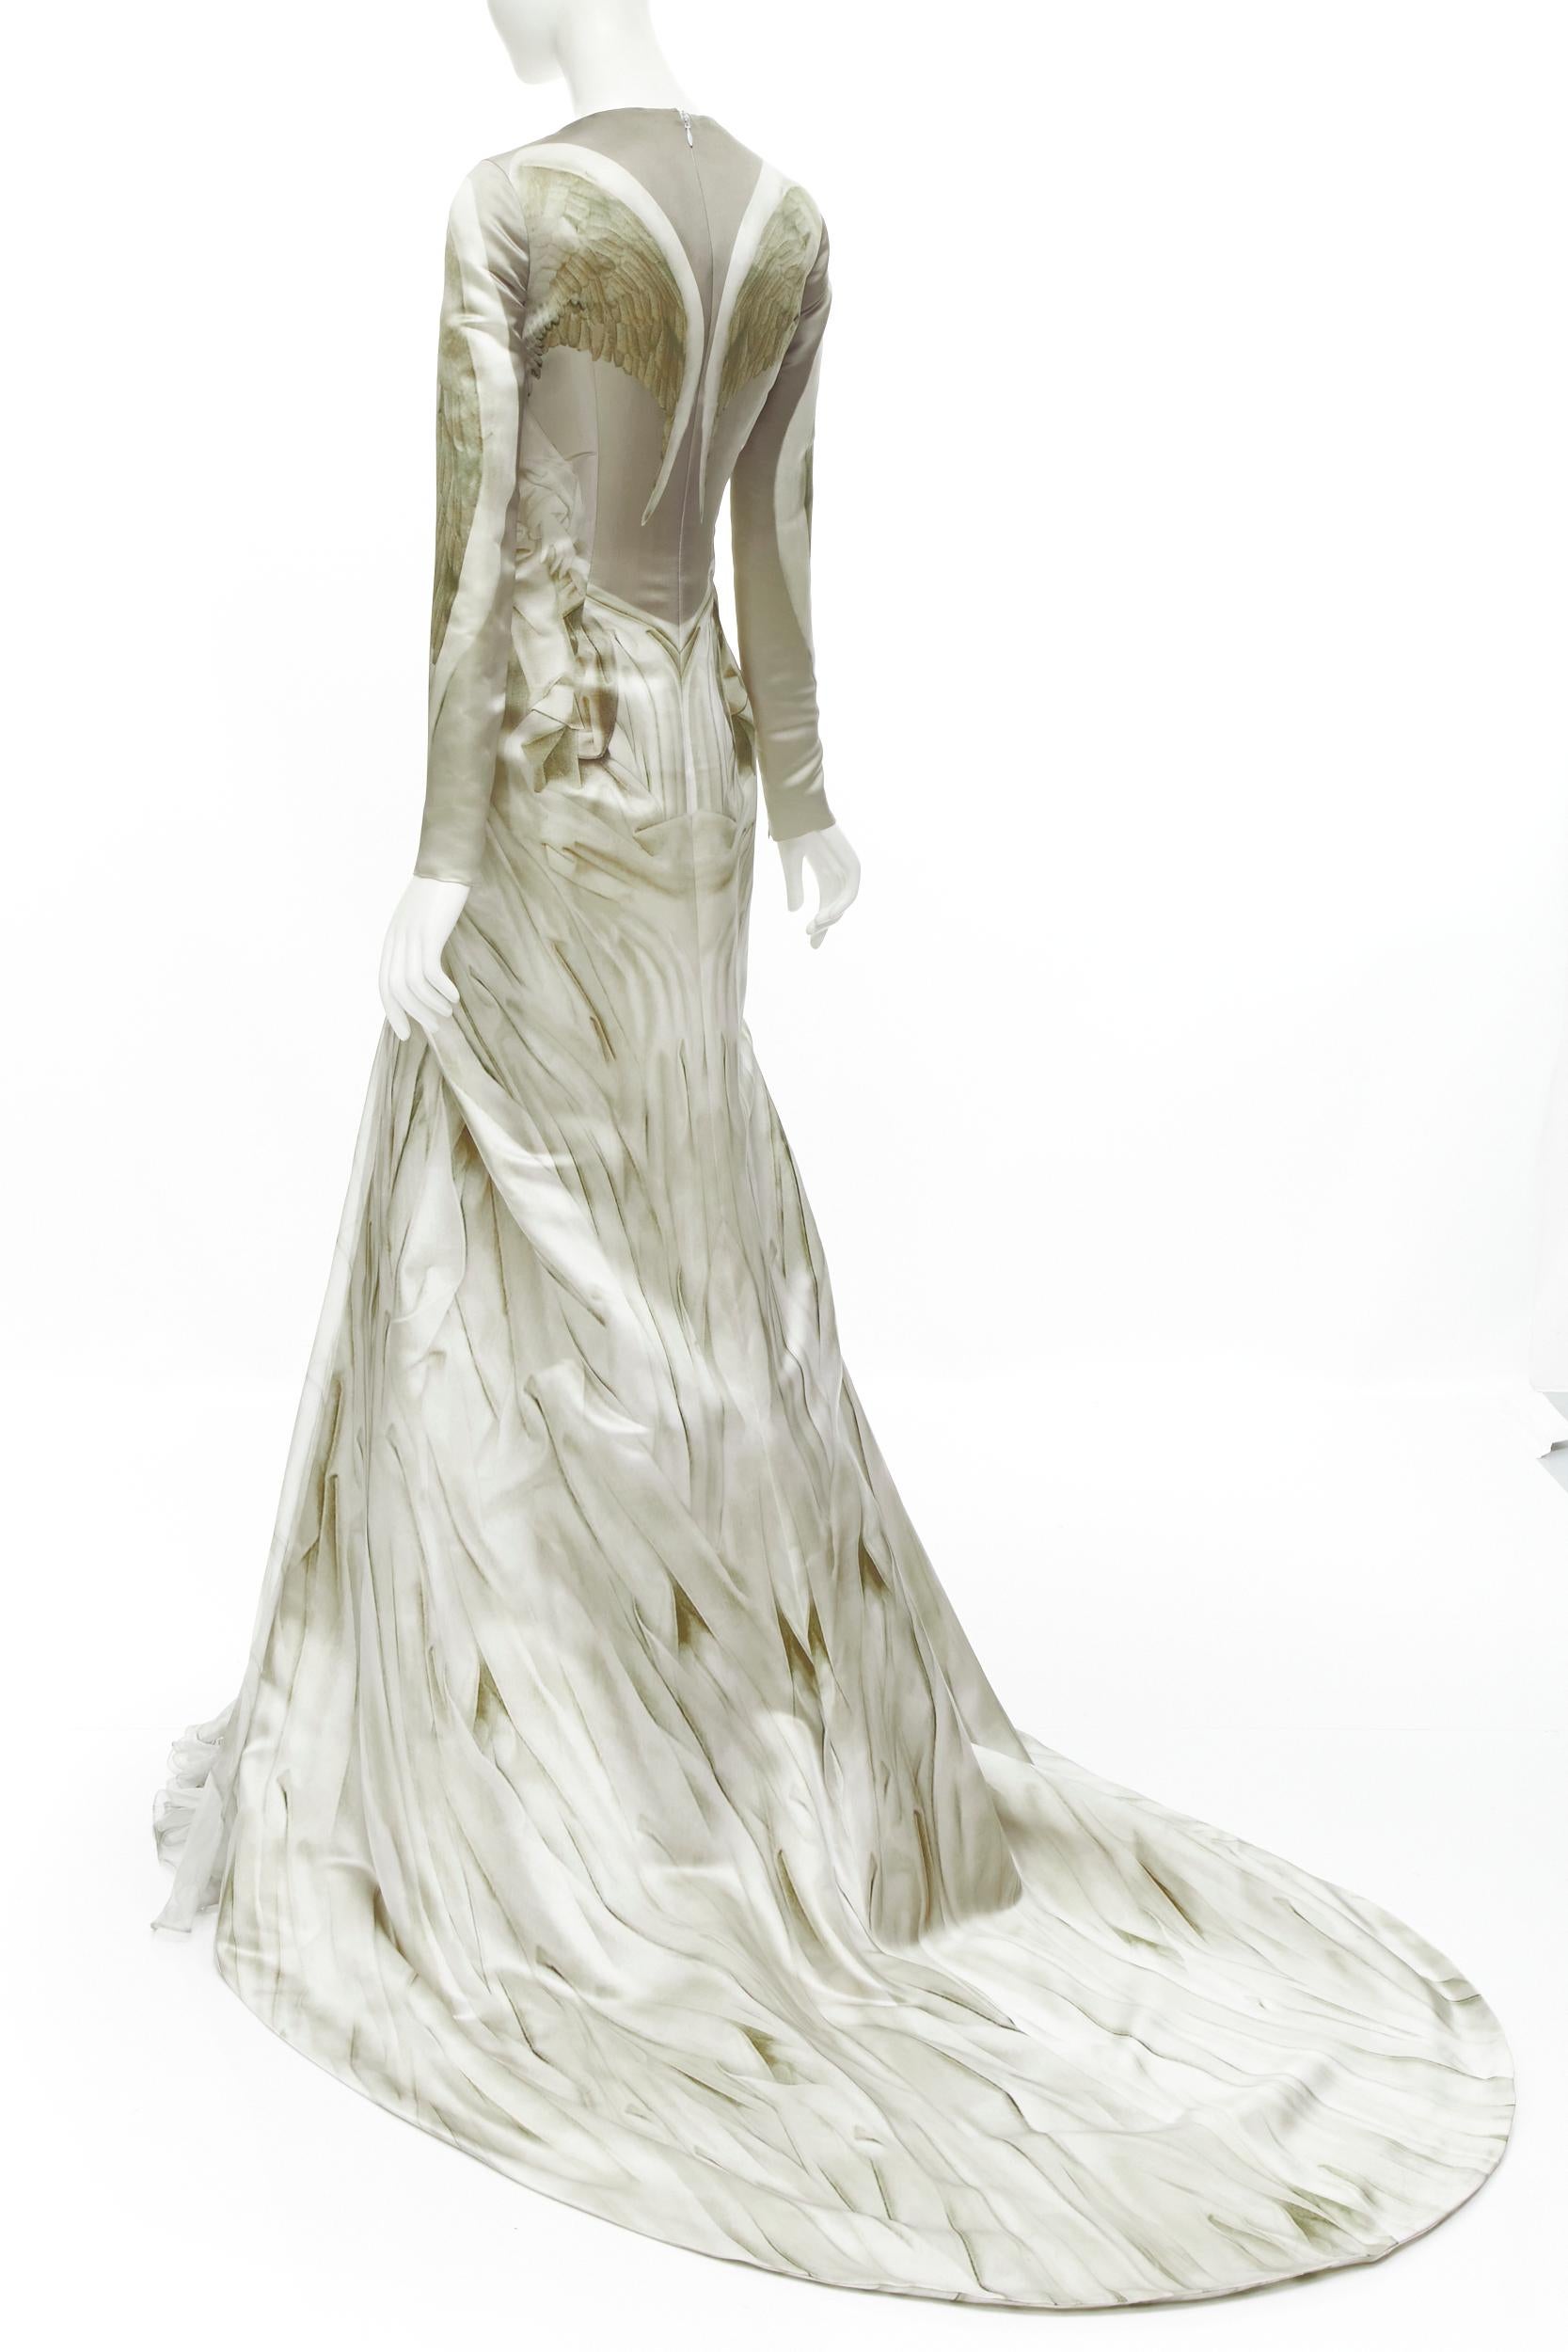 ALEXANDER MCQUEEN - Robe jupe en mousseline embellie Angels Demons, taille IT 40, 2010 en vente 1